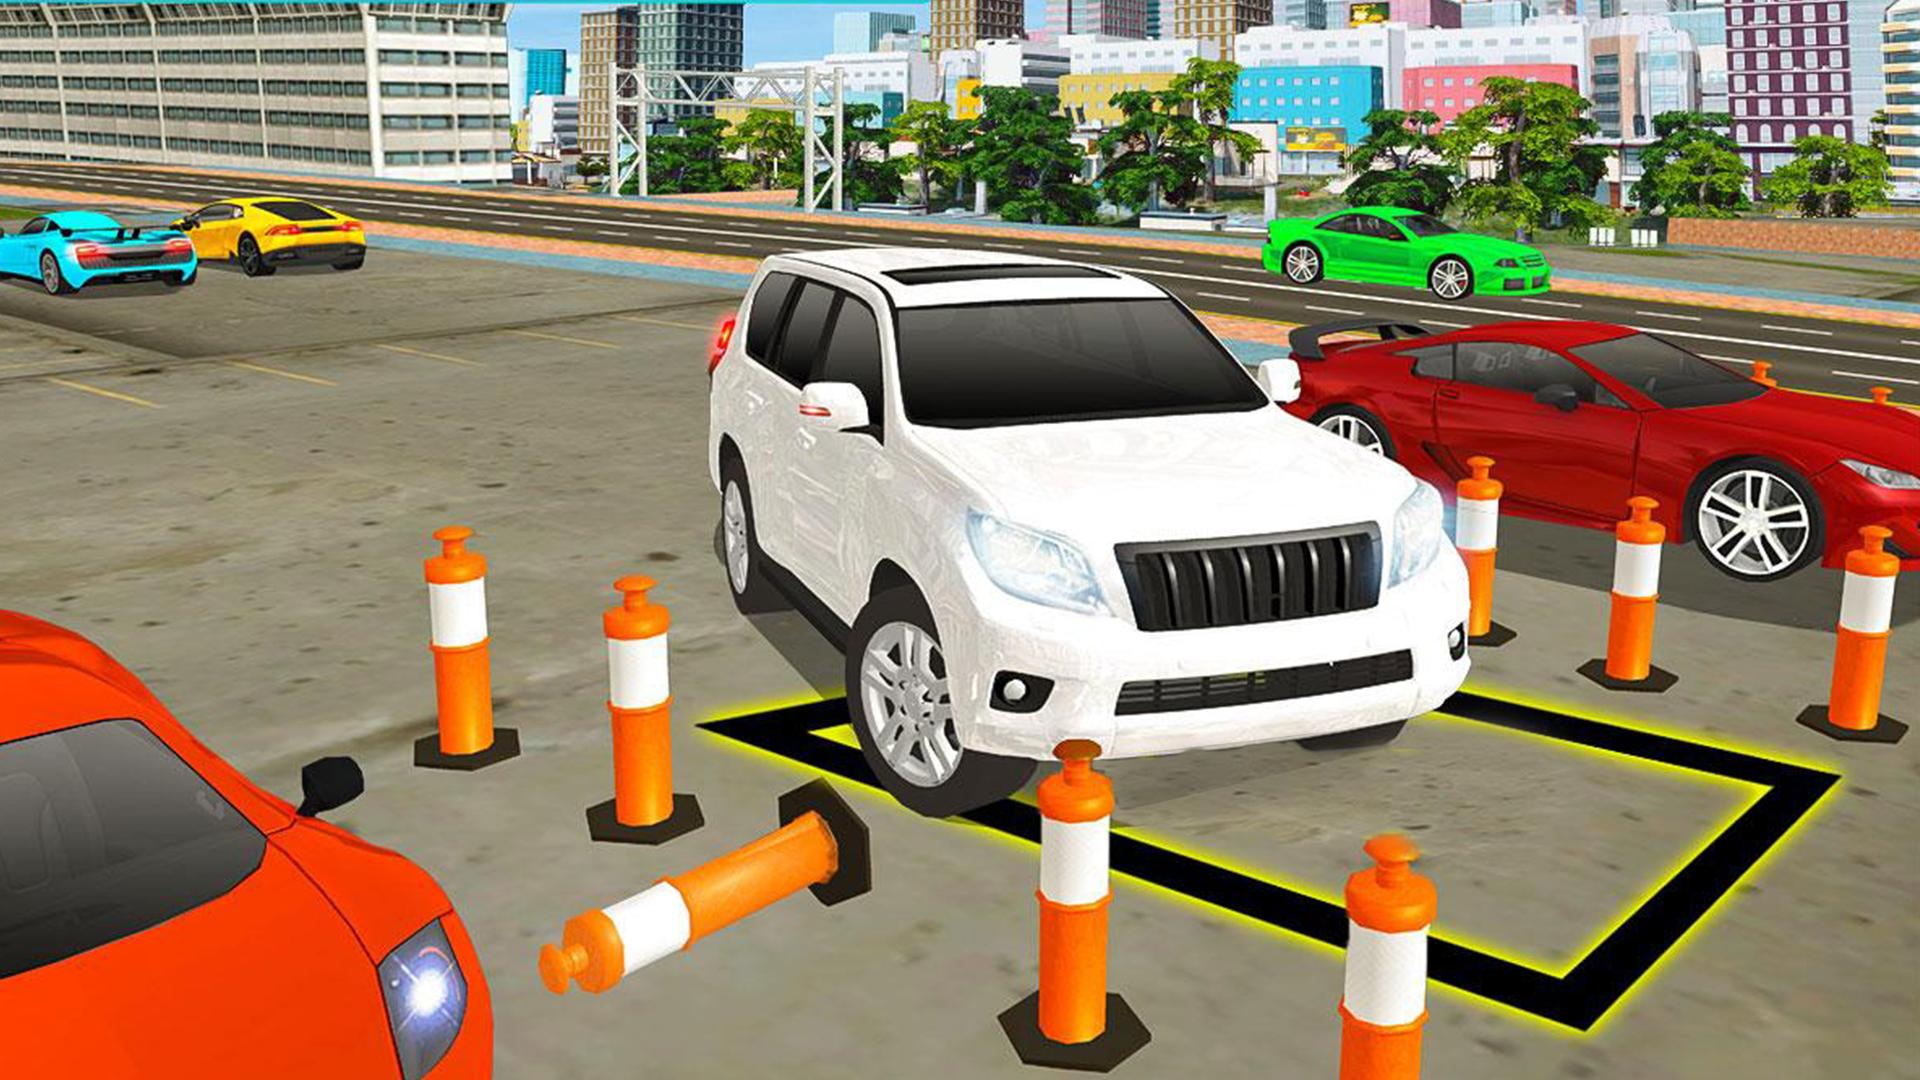 Prado Car Driving games 2020 - Free Car Games 1.0.3 Screenshot 7